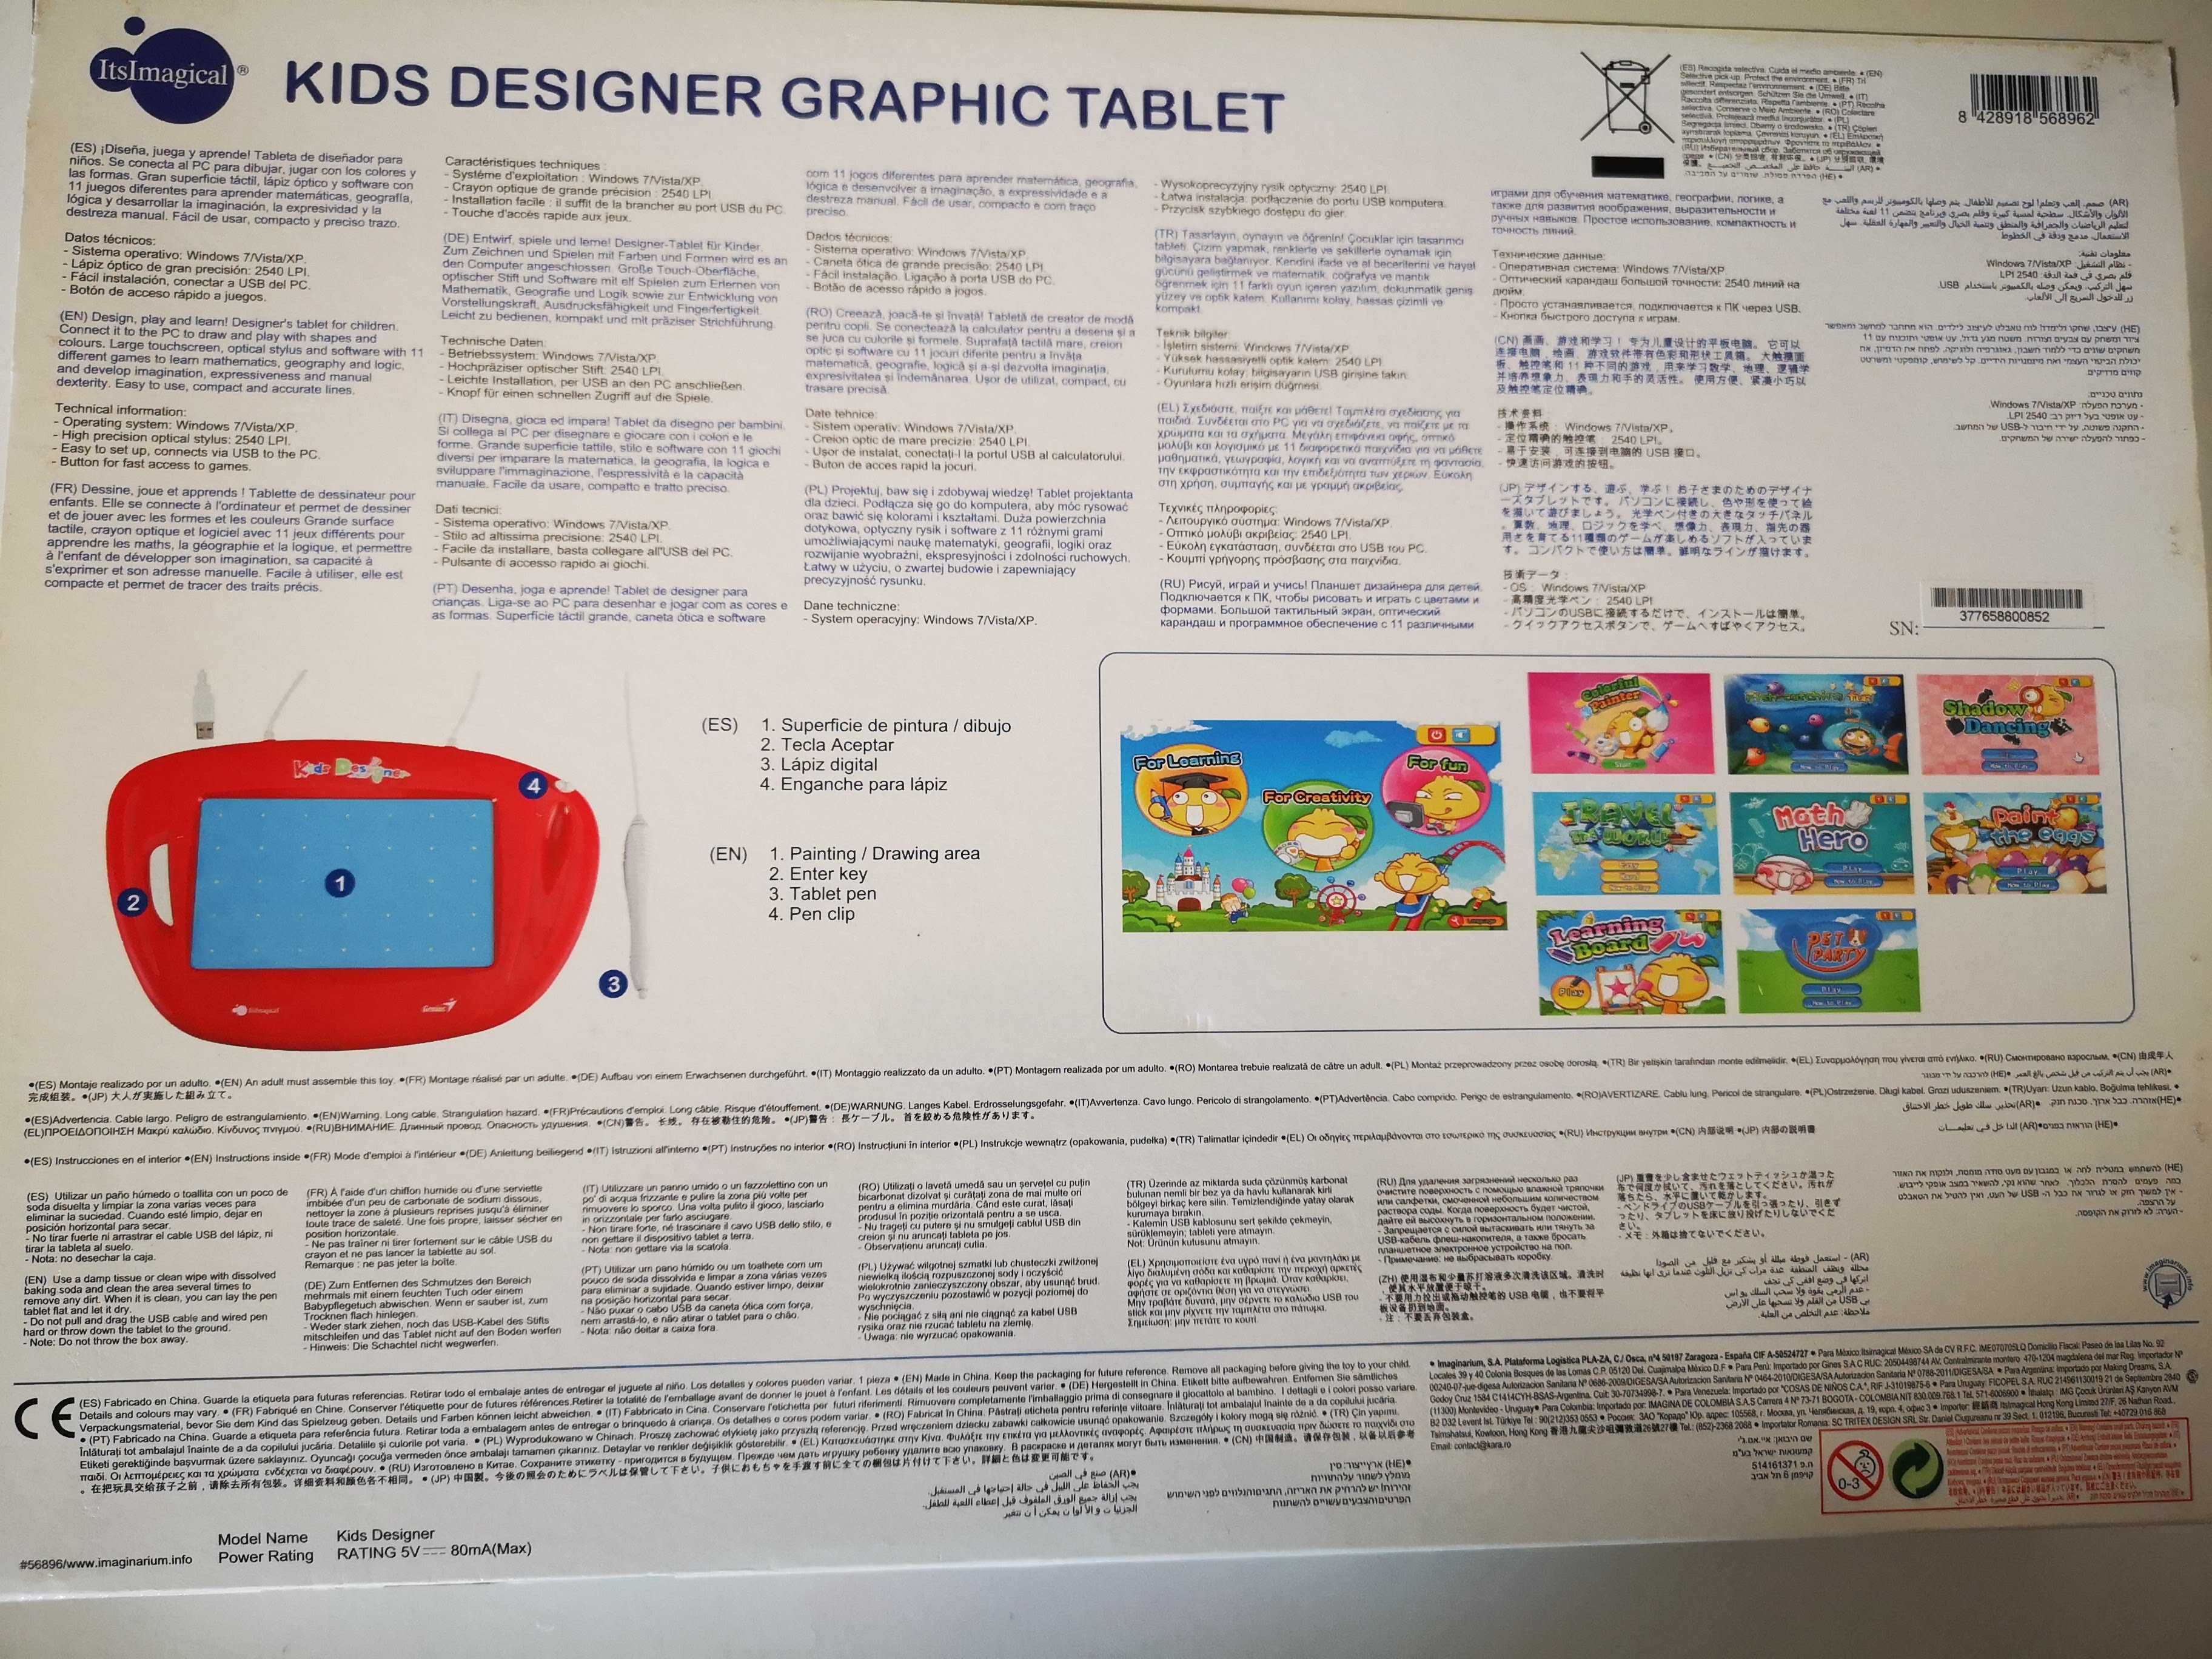 Kids Designer Graphic Tablet - Imaginarium - dos 3 aos 8 anos